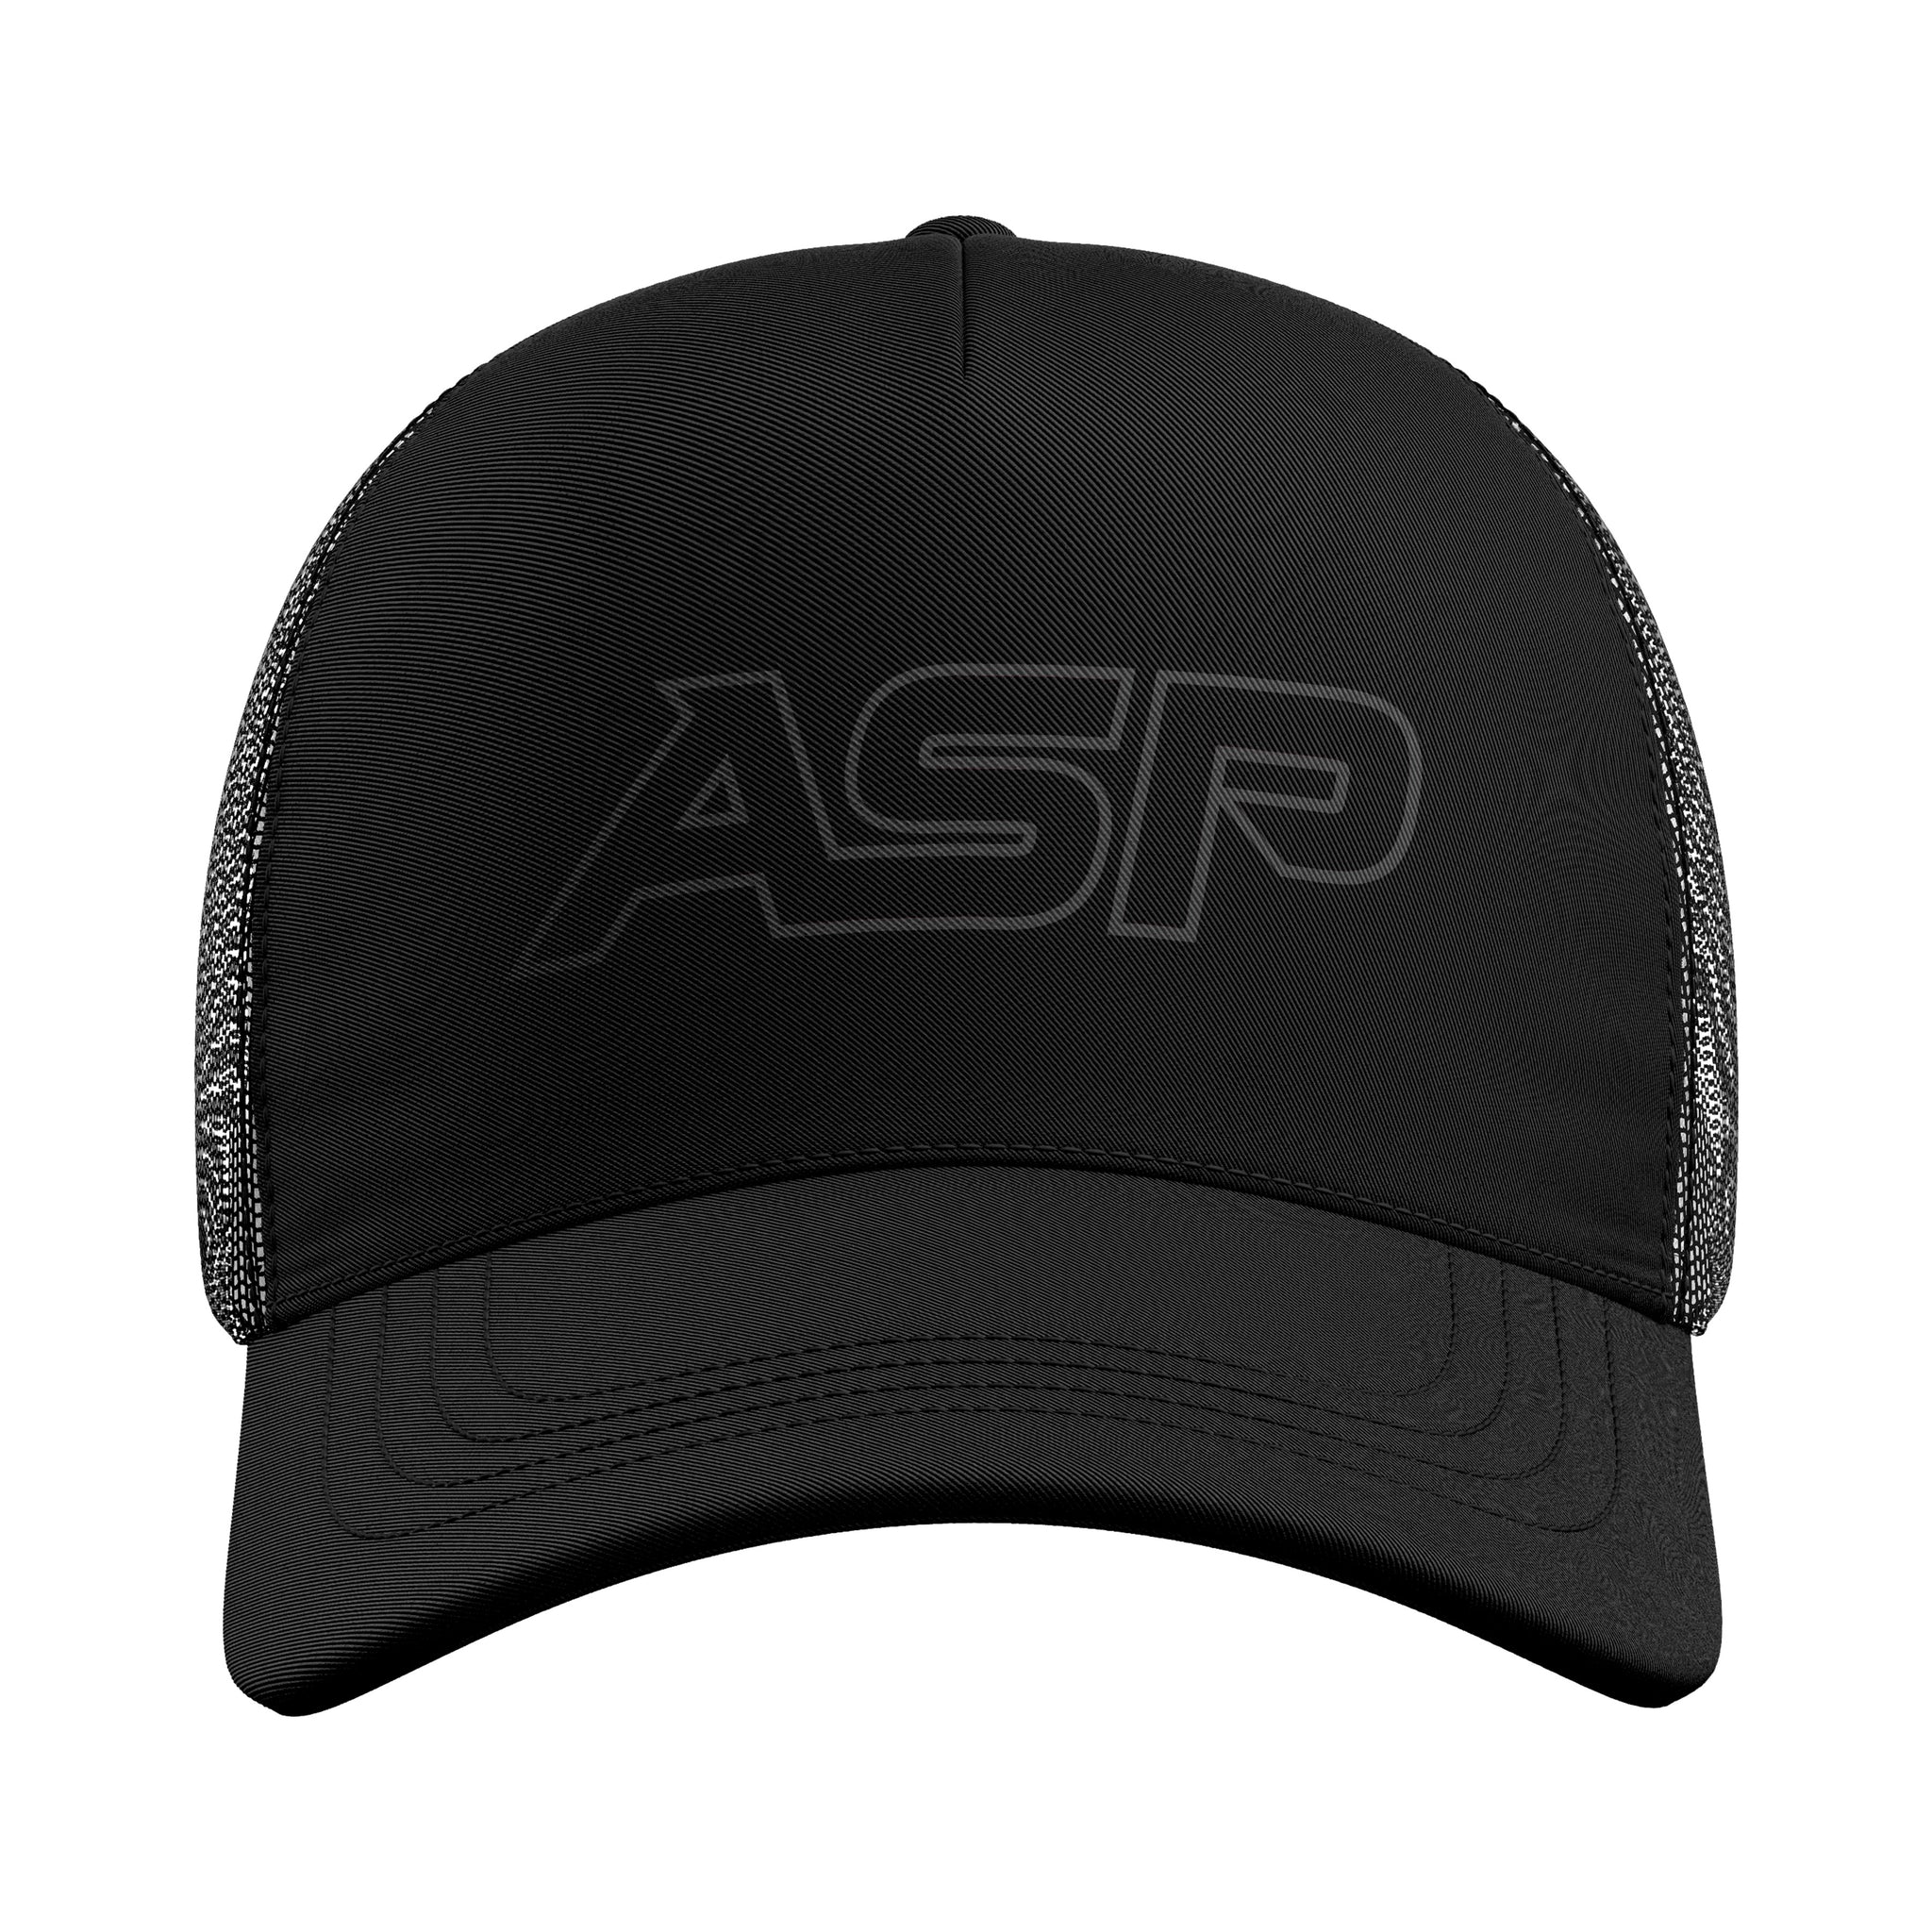 ASP Signature Series Snapback Hat